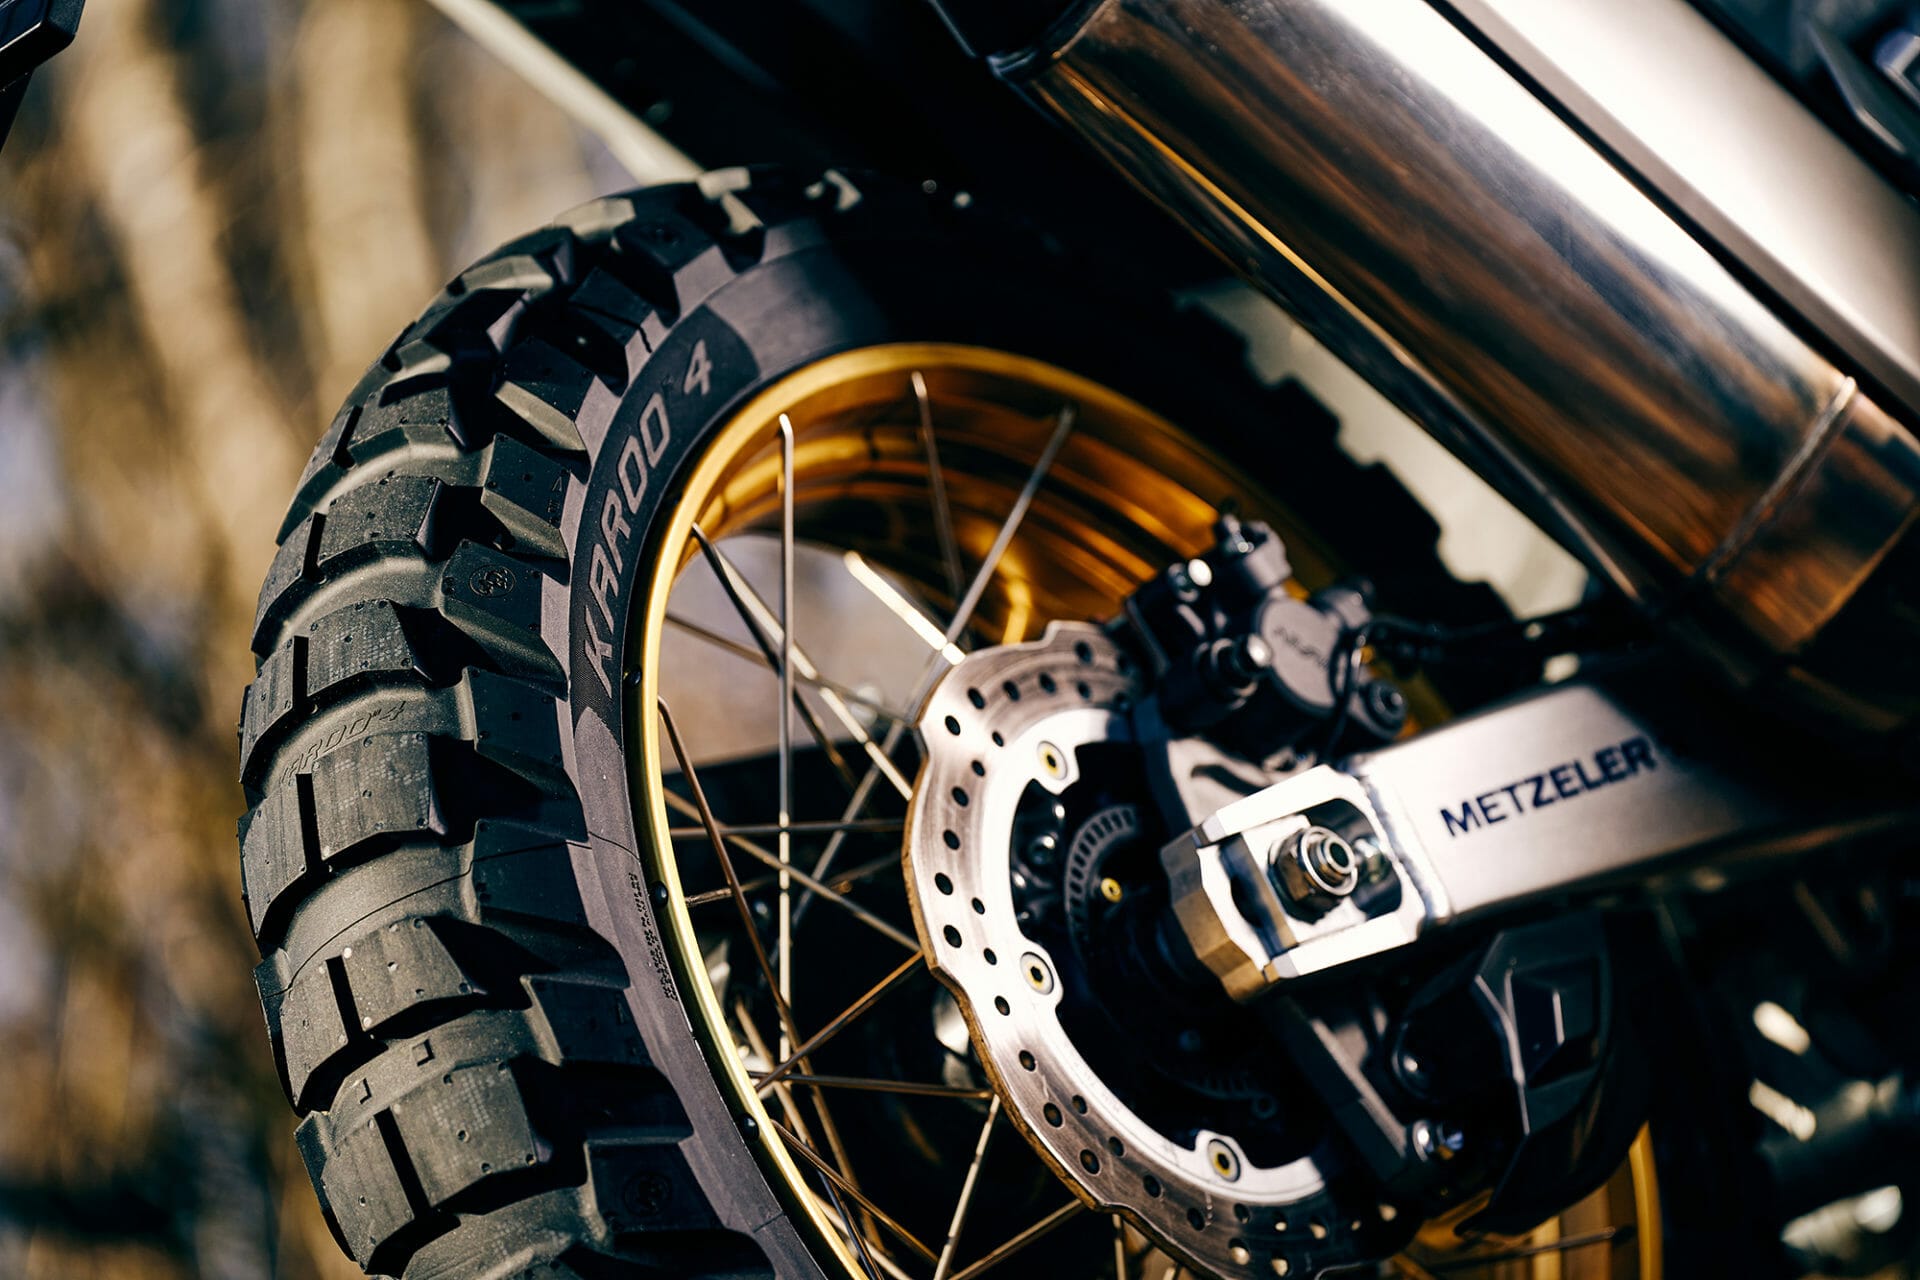 New: METZELER KAROO 4
- also in the MOTORCYCLES.NEWS APP